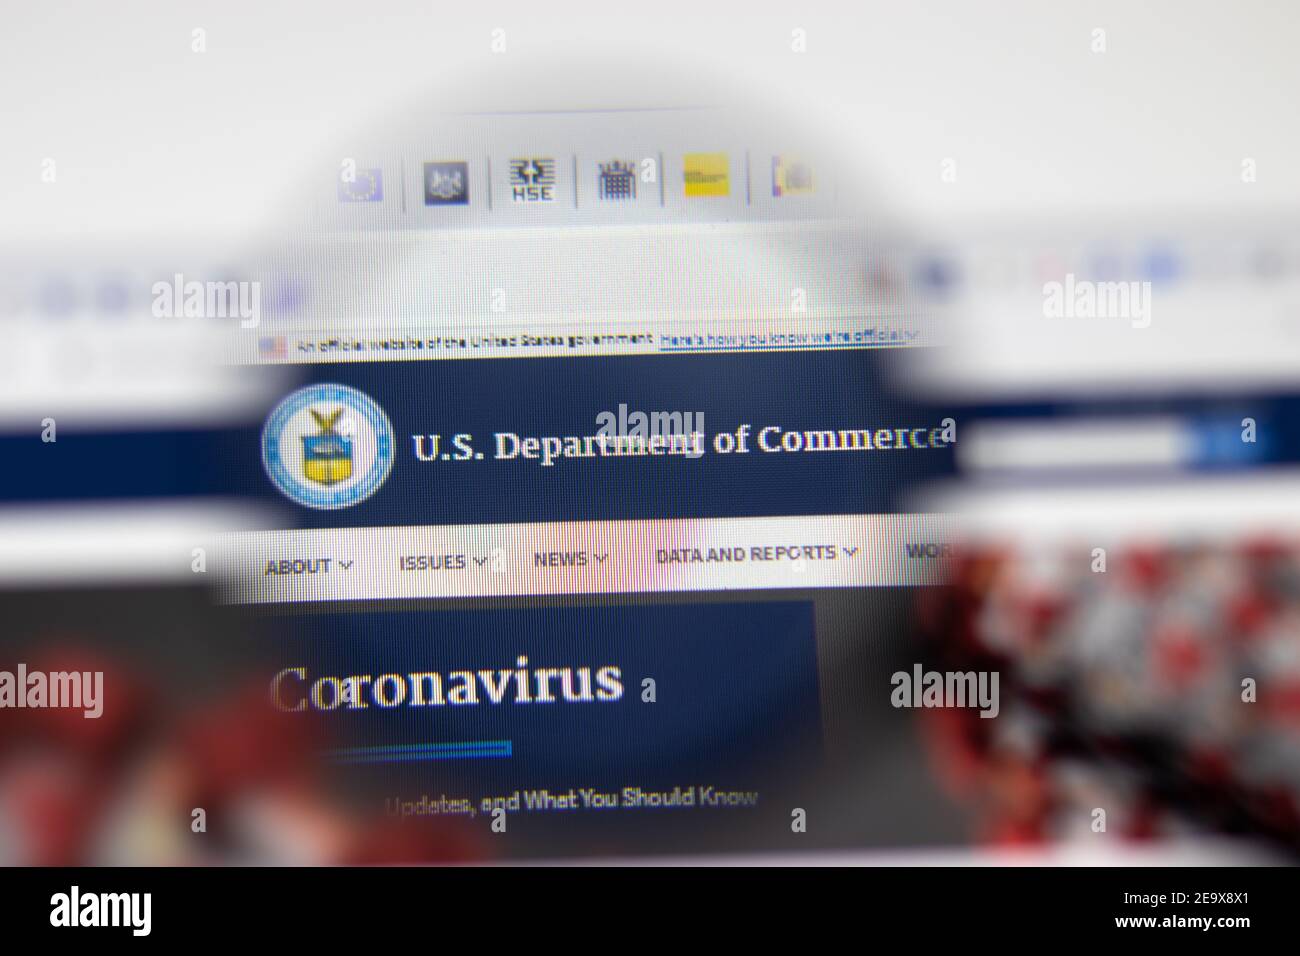 Los Angeles, USA - 1. Februar 2021: WEBSITE DES US-Handelsministeriums. Commerce.gov Logo auf dem Display, illustrative Editorial Stockfoto